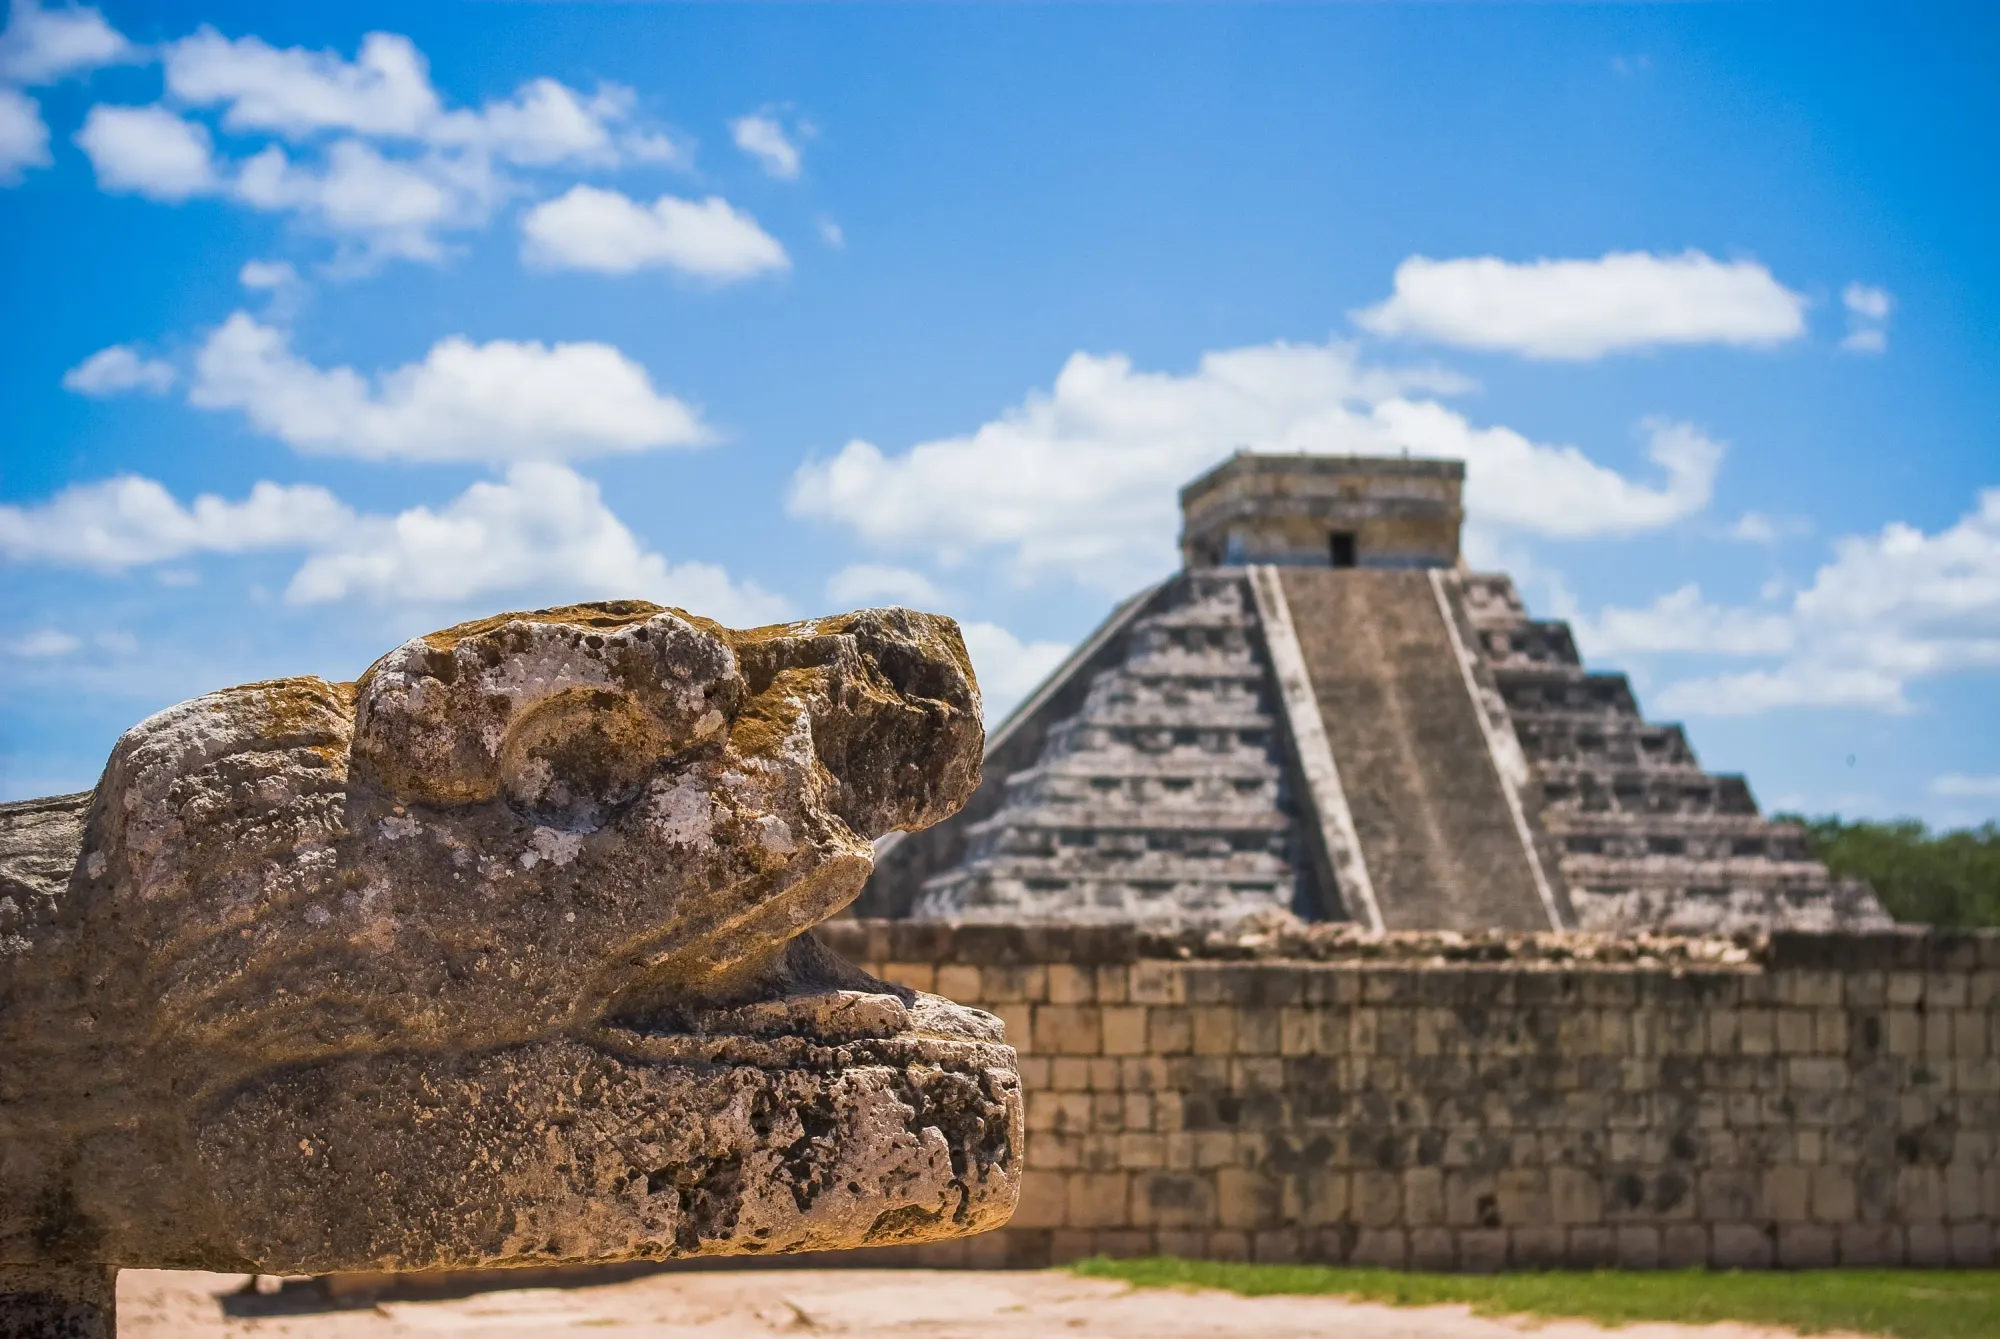 Image of Chichen Itza (Mayan ruins) in Mexico